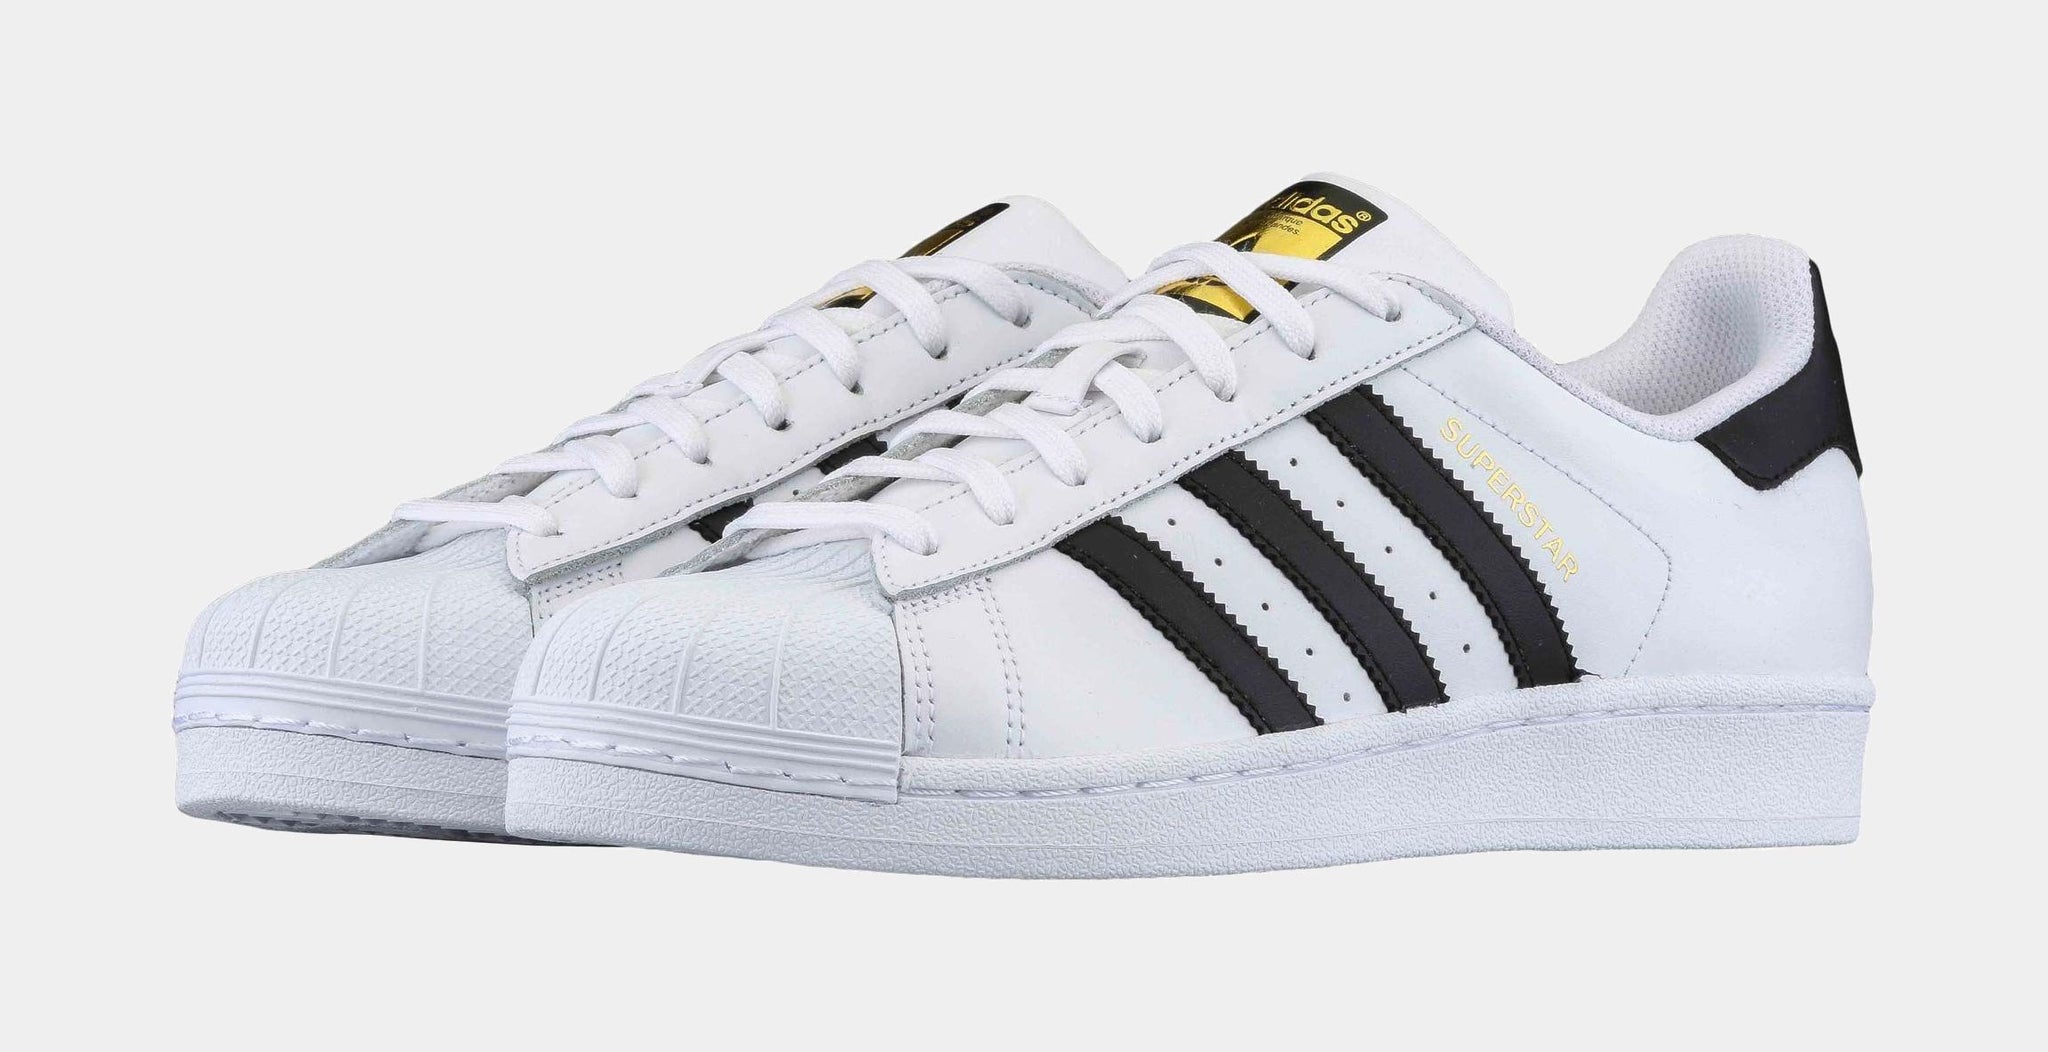 Adidas Superstar Shell Toe White Black size 6.5